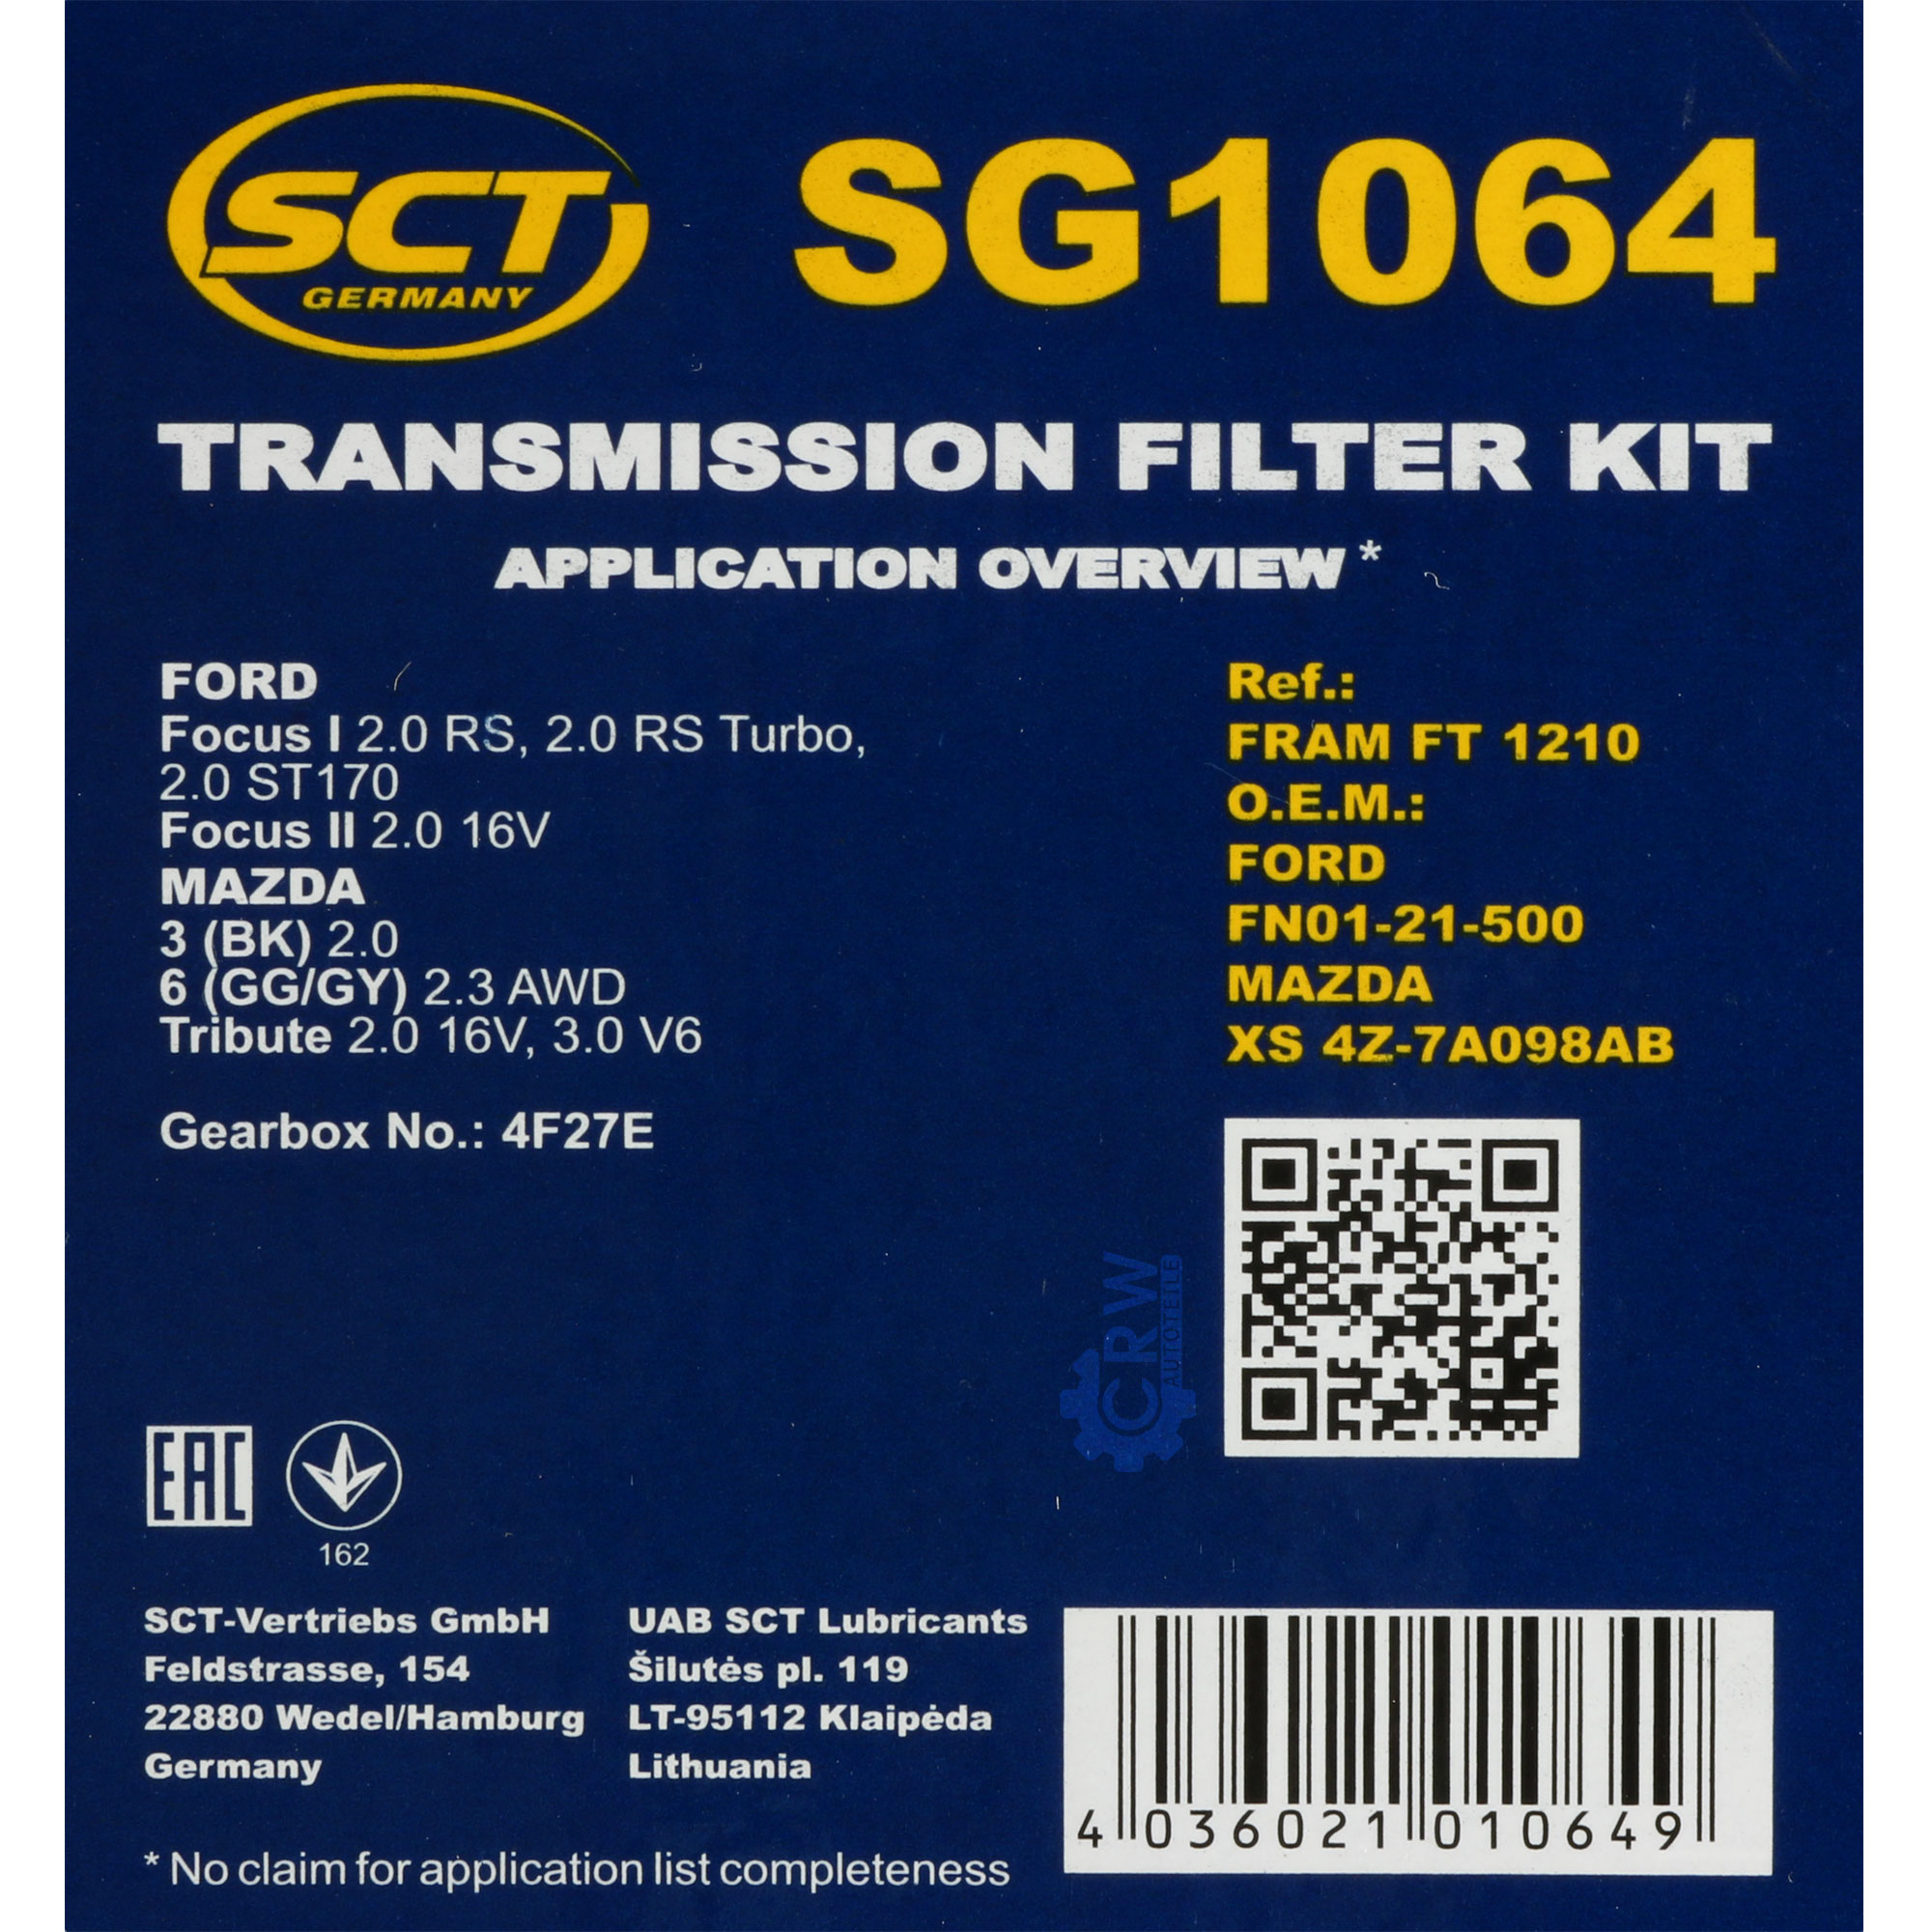 SCT Getriebeölfilter Filter SG 1064 für Automatikgetriebe ATF